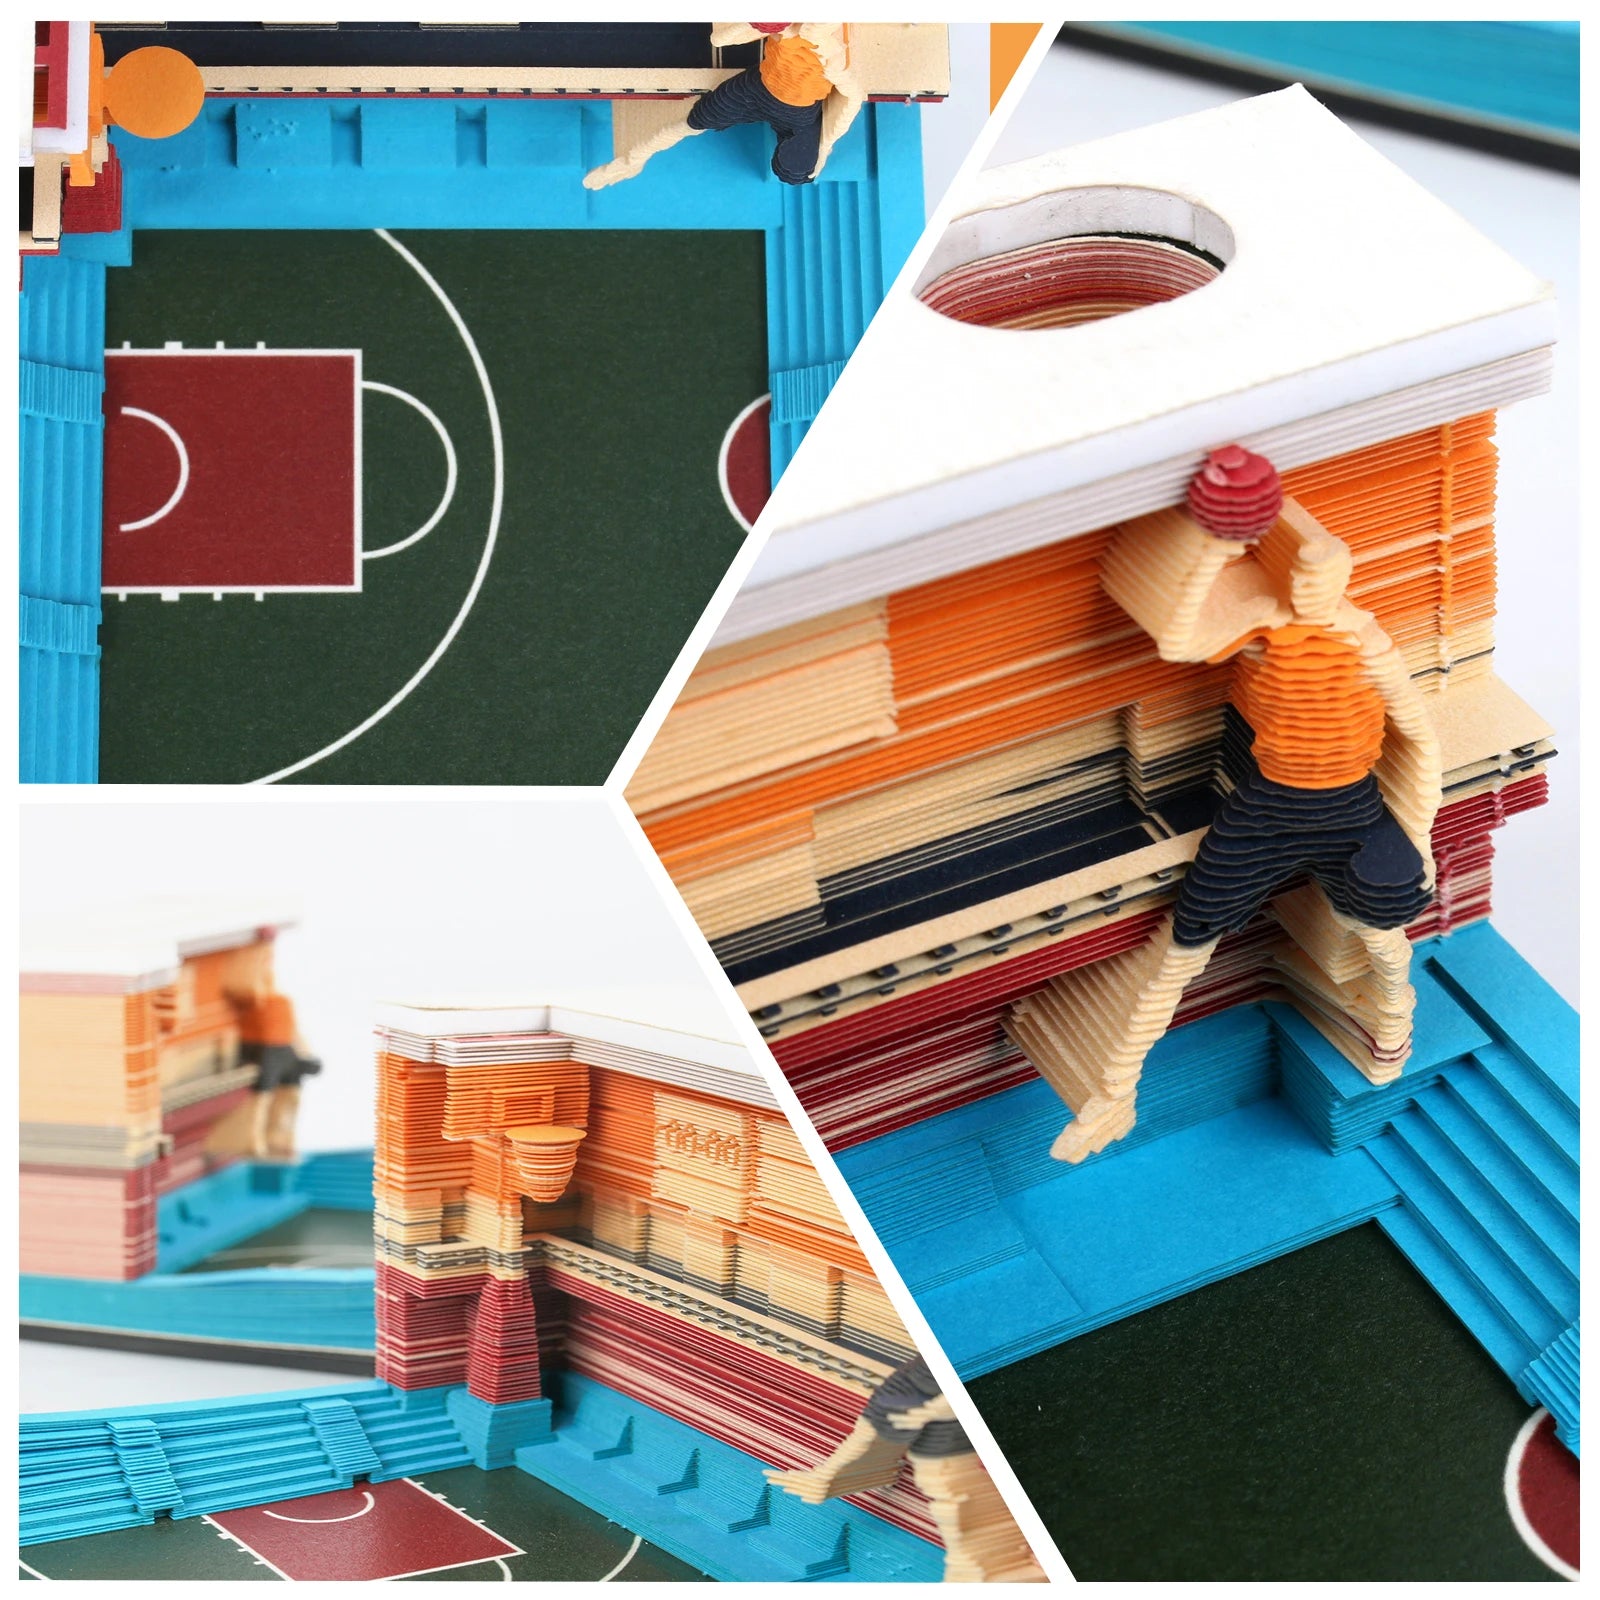 Basketball Omoshiroi Block 3D Memo Pad